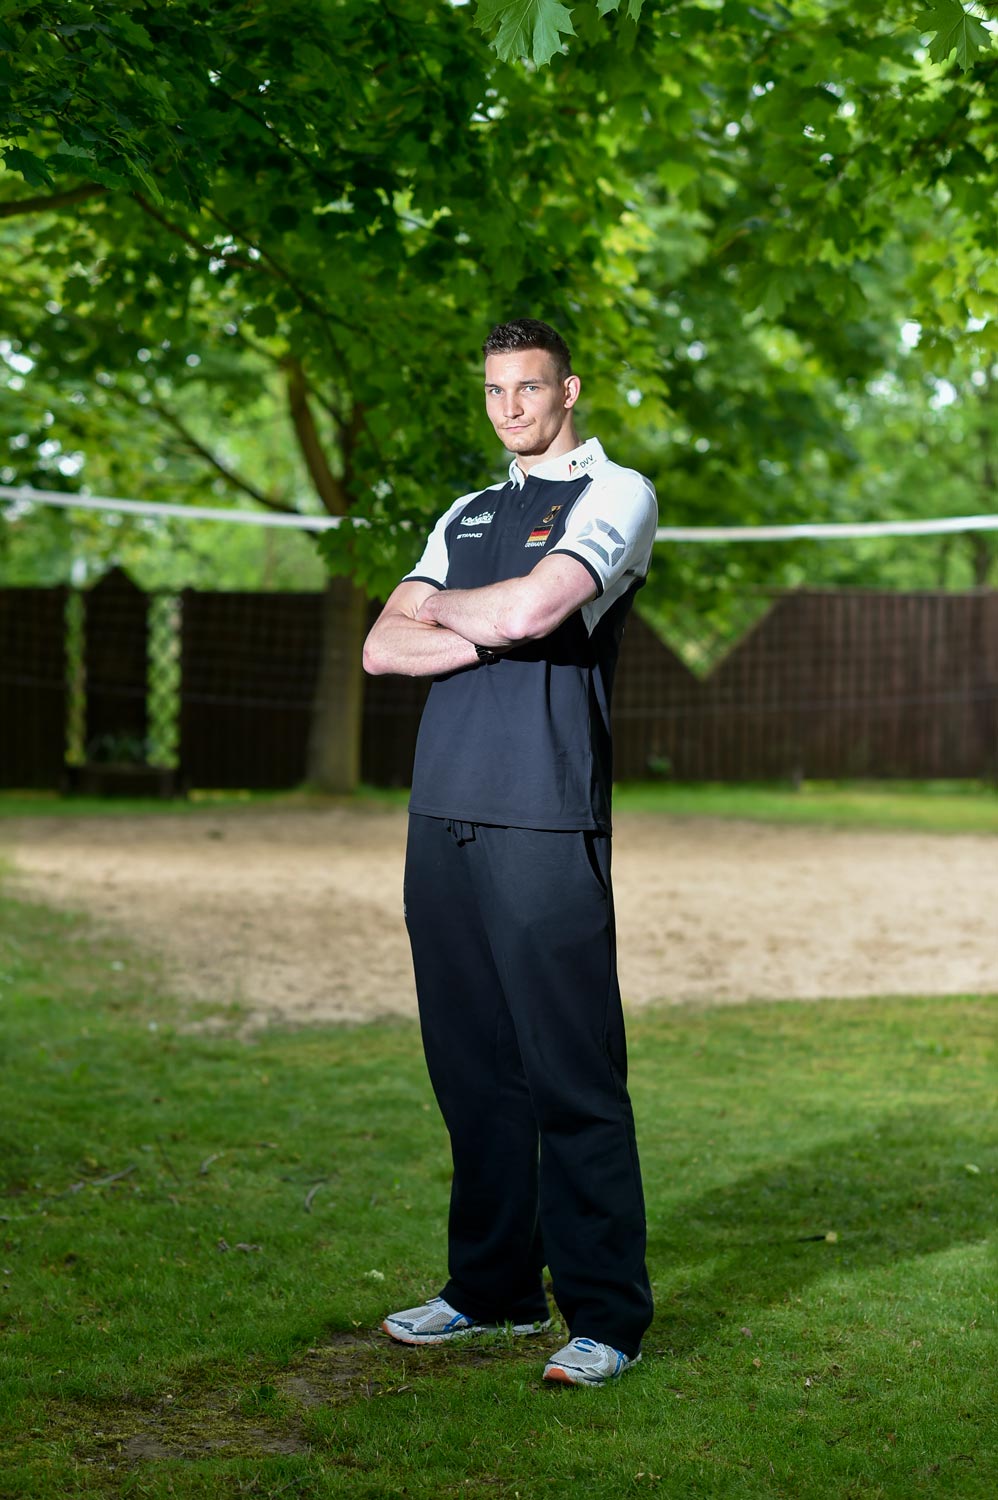 Volleyball Nationalspieler Christian Fromm